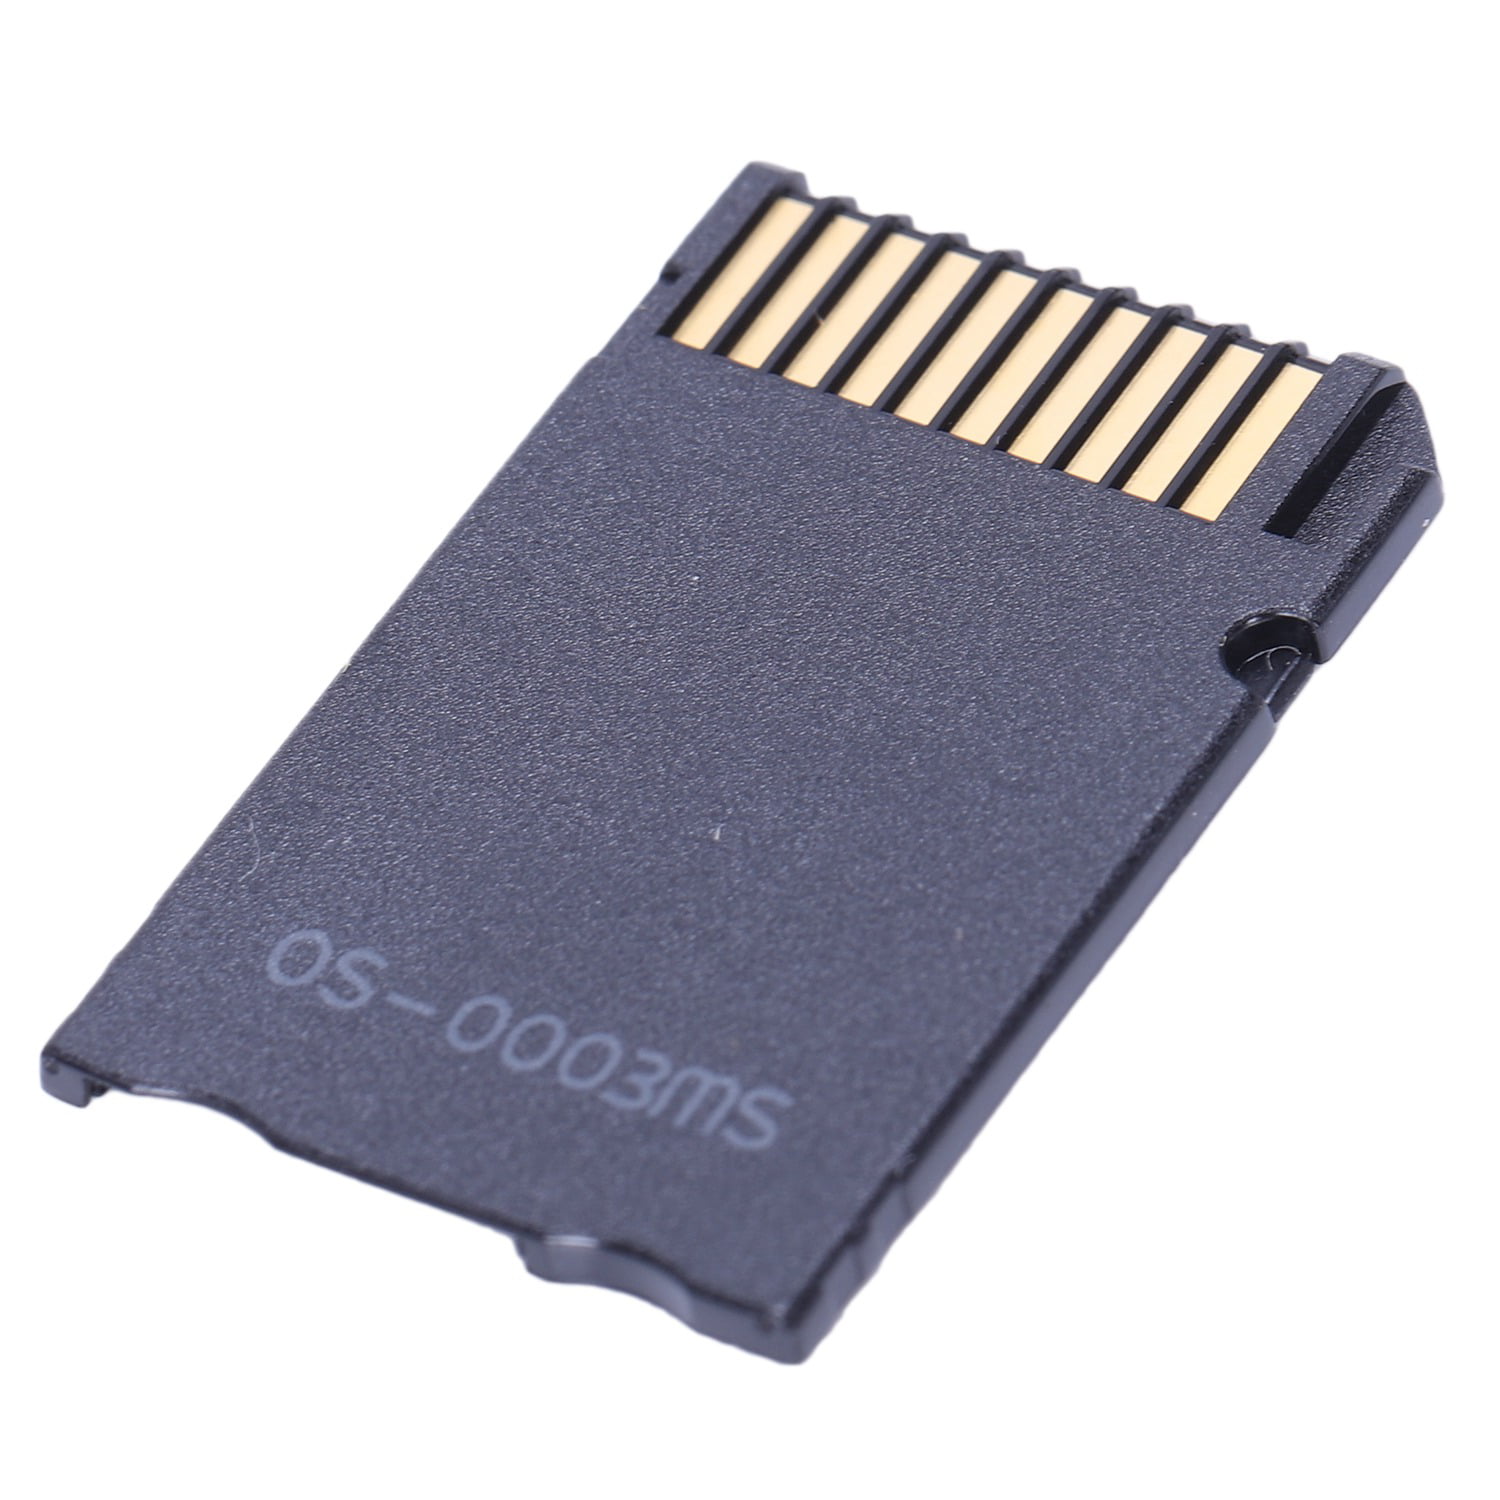 2 Pcs Psp Memory Stick Adapter, Funturbo Micro Sd To Memory Stick